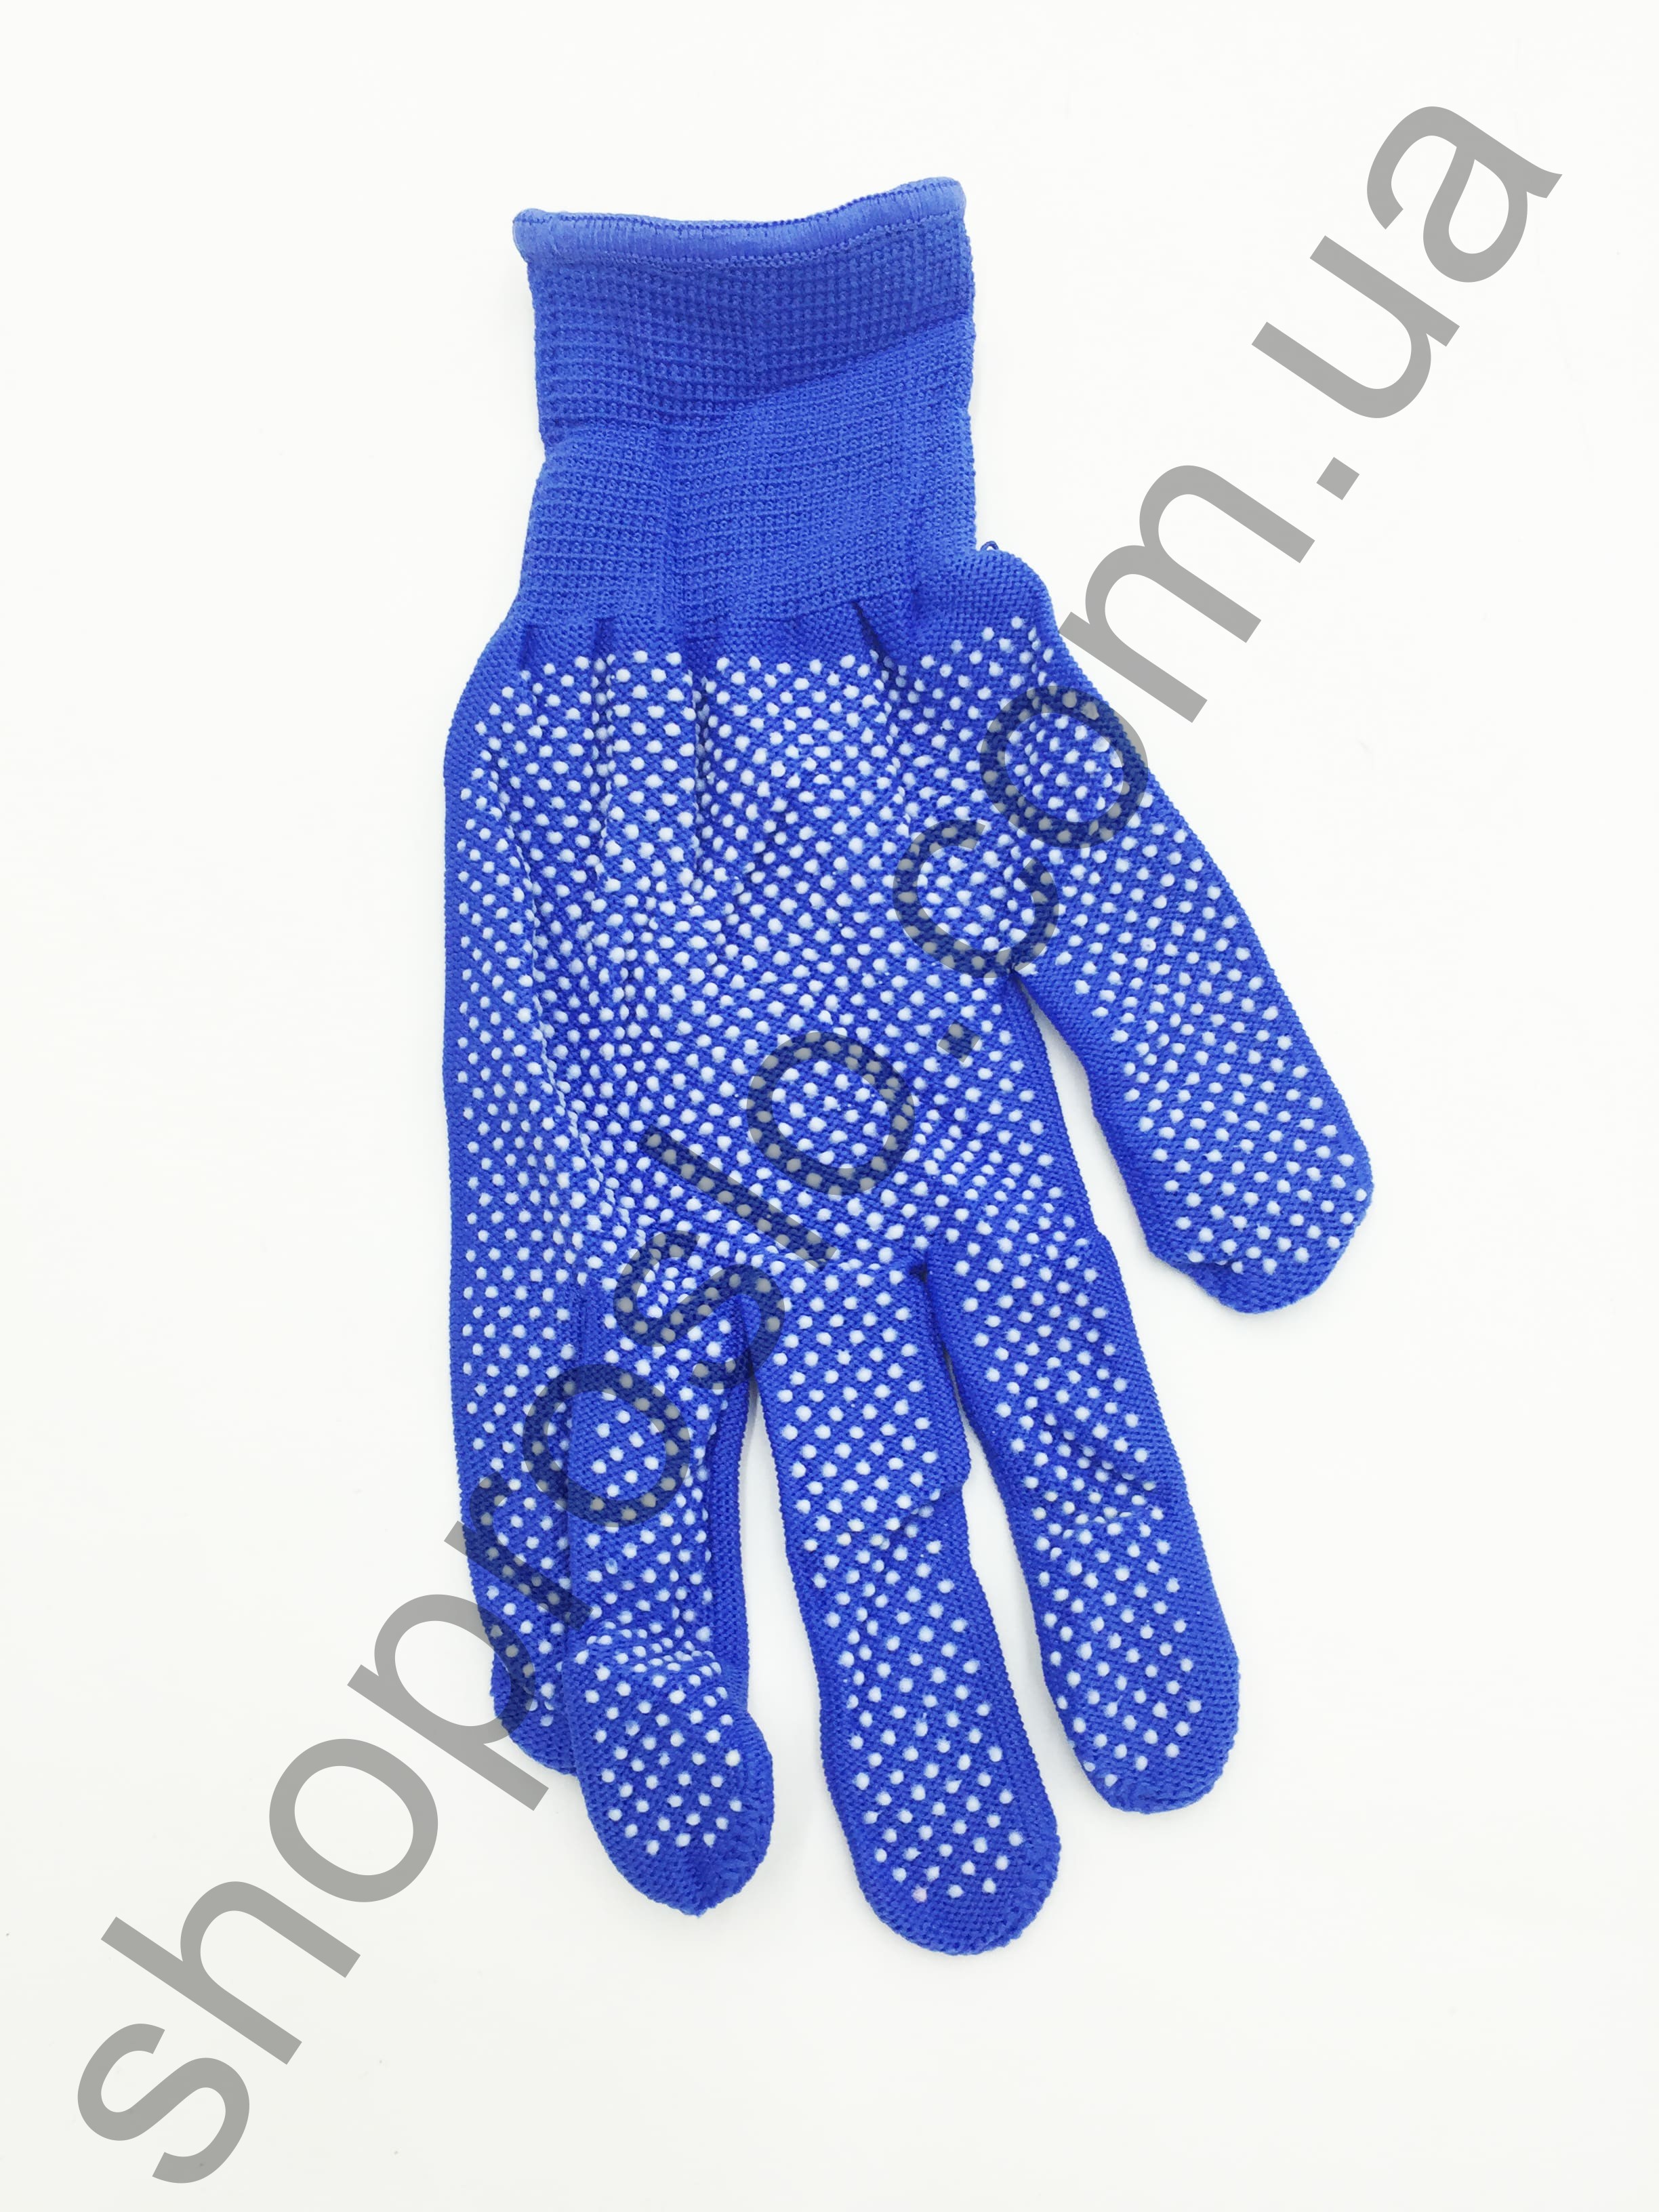 Перчатки синие с точкой нейлон ПВХ, размер 9, (Китай)